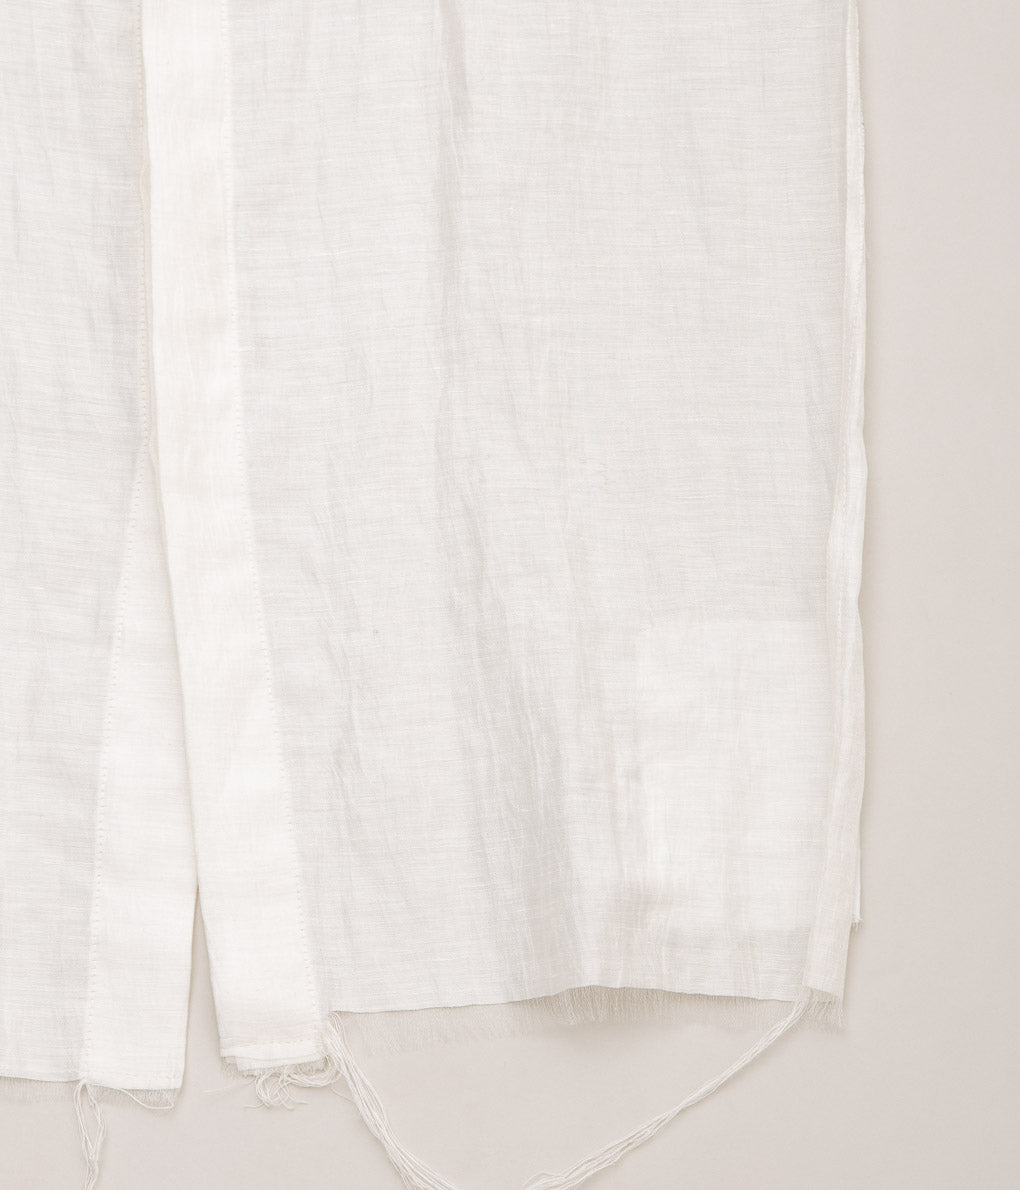 OLUBIYI THOMAS "BUGGY BACKLESS SHIRT IN WHITE COTTON SHEEN VISCOSE" (OFF WHITE)